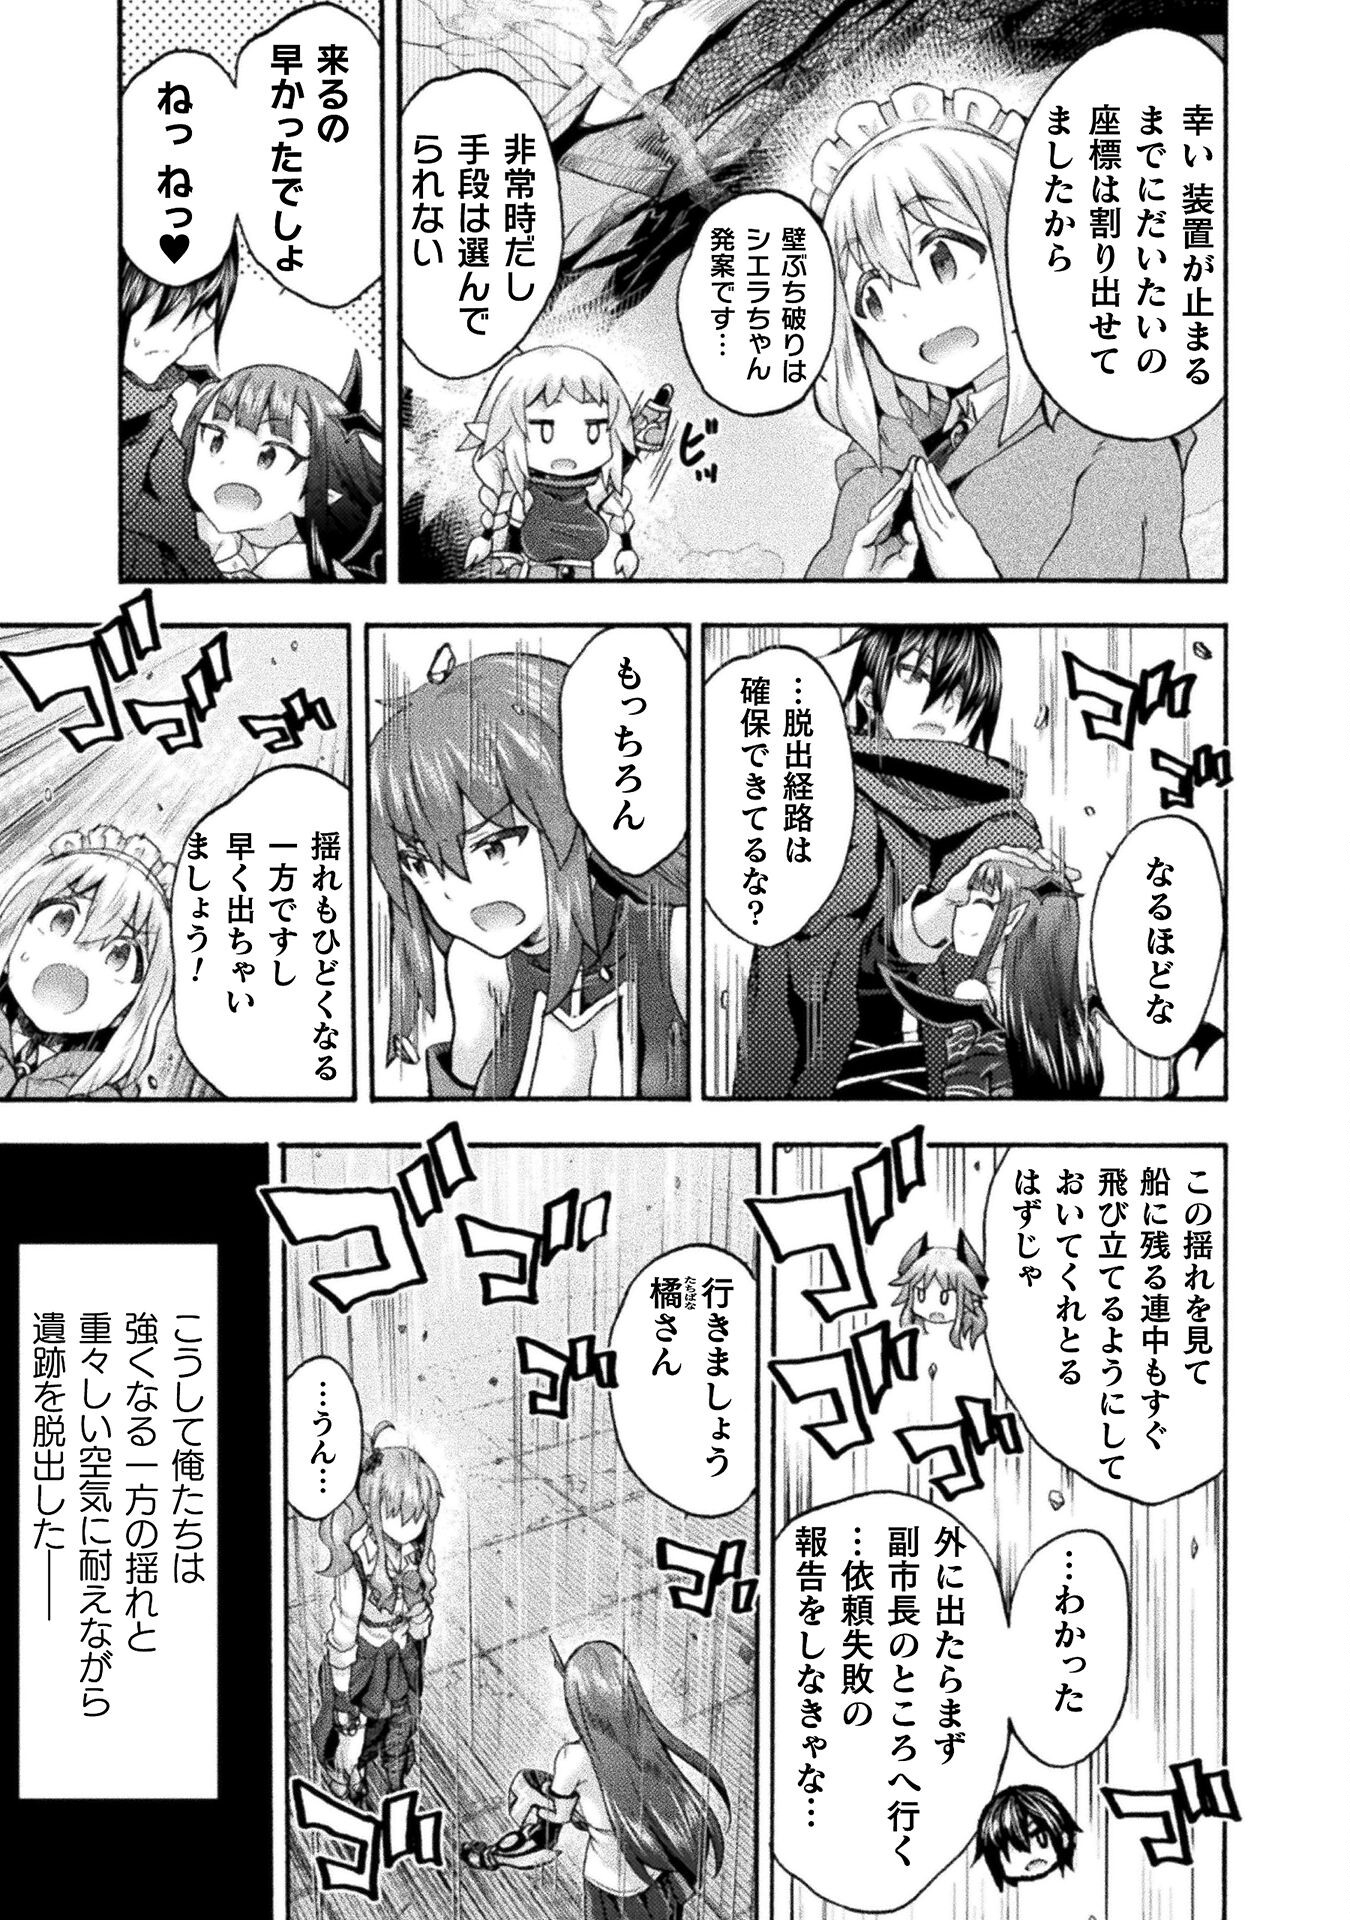 Himekishi ga Classmate! - Chapter 60 - Page 3